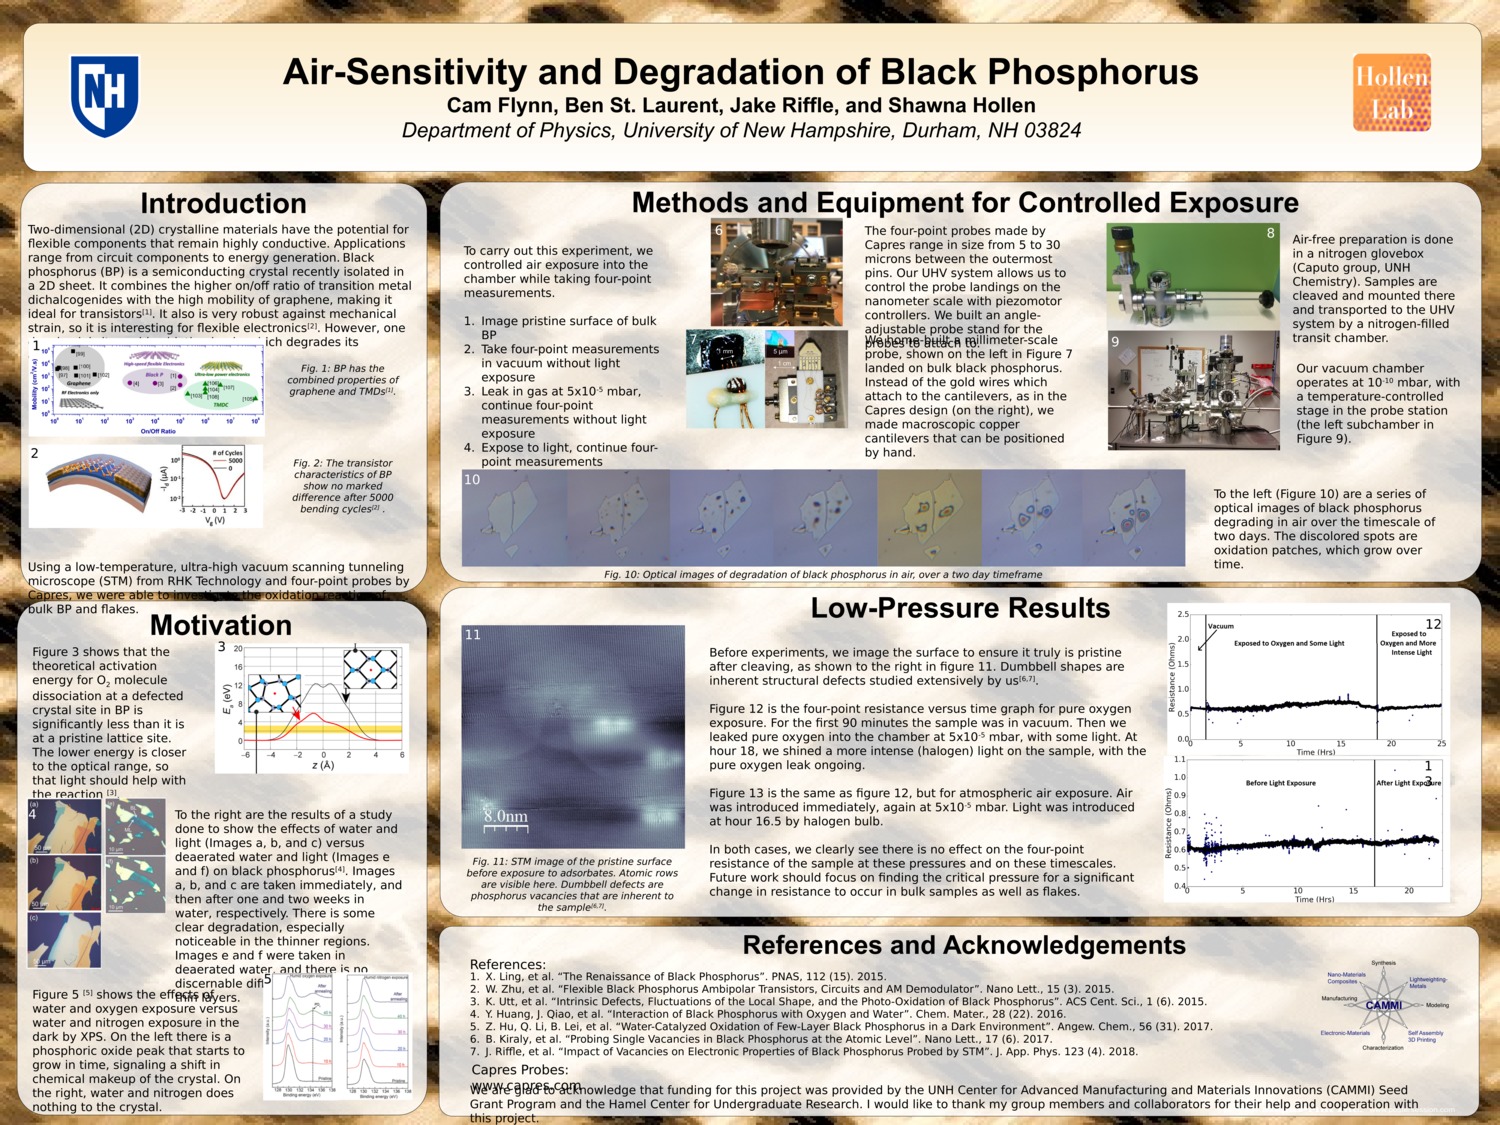 Air-Sensitivity And Degradation Of Black Phosphorus by ccm46